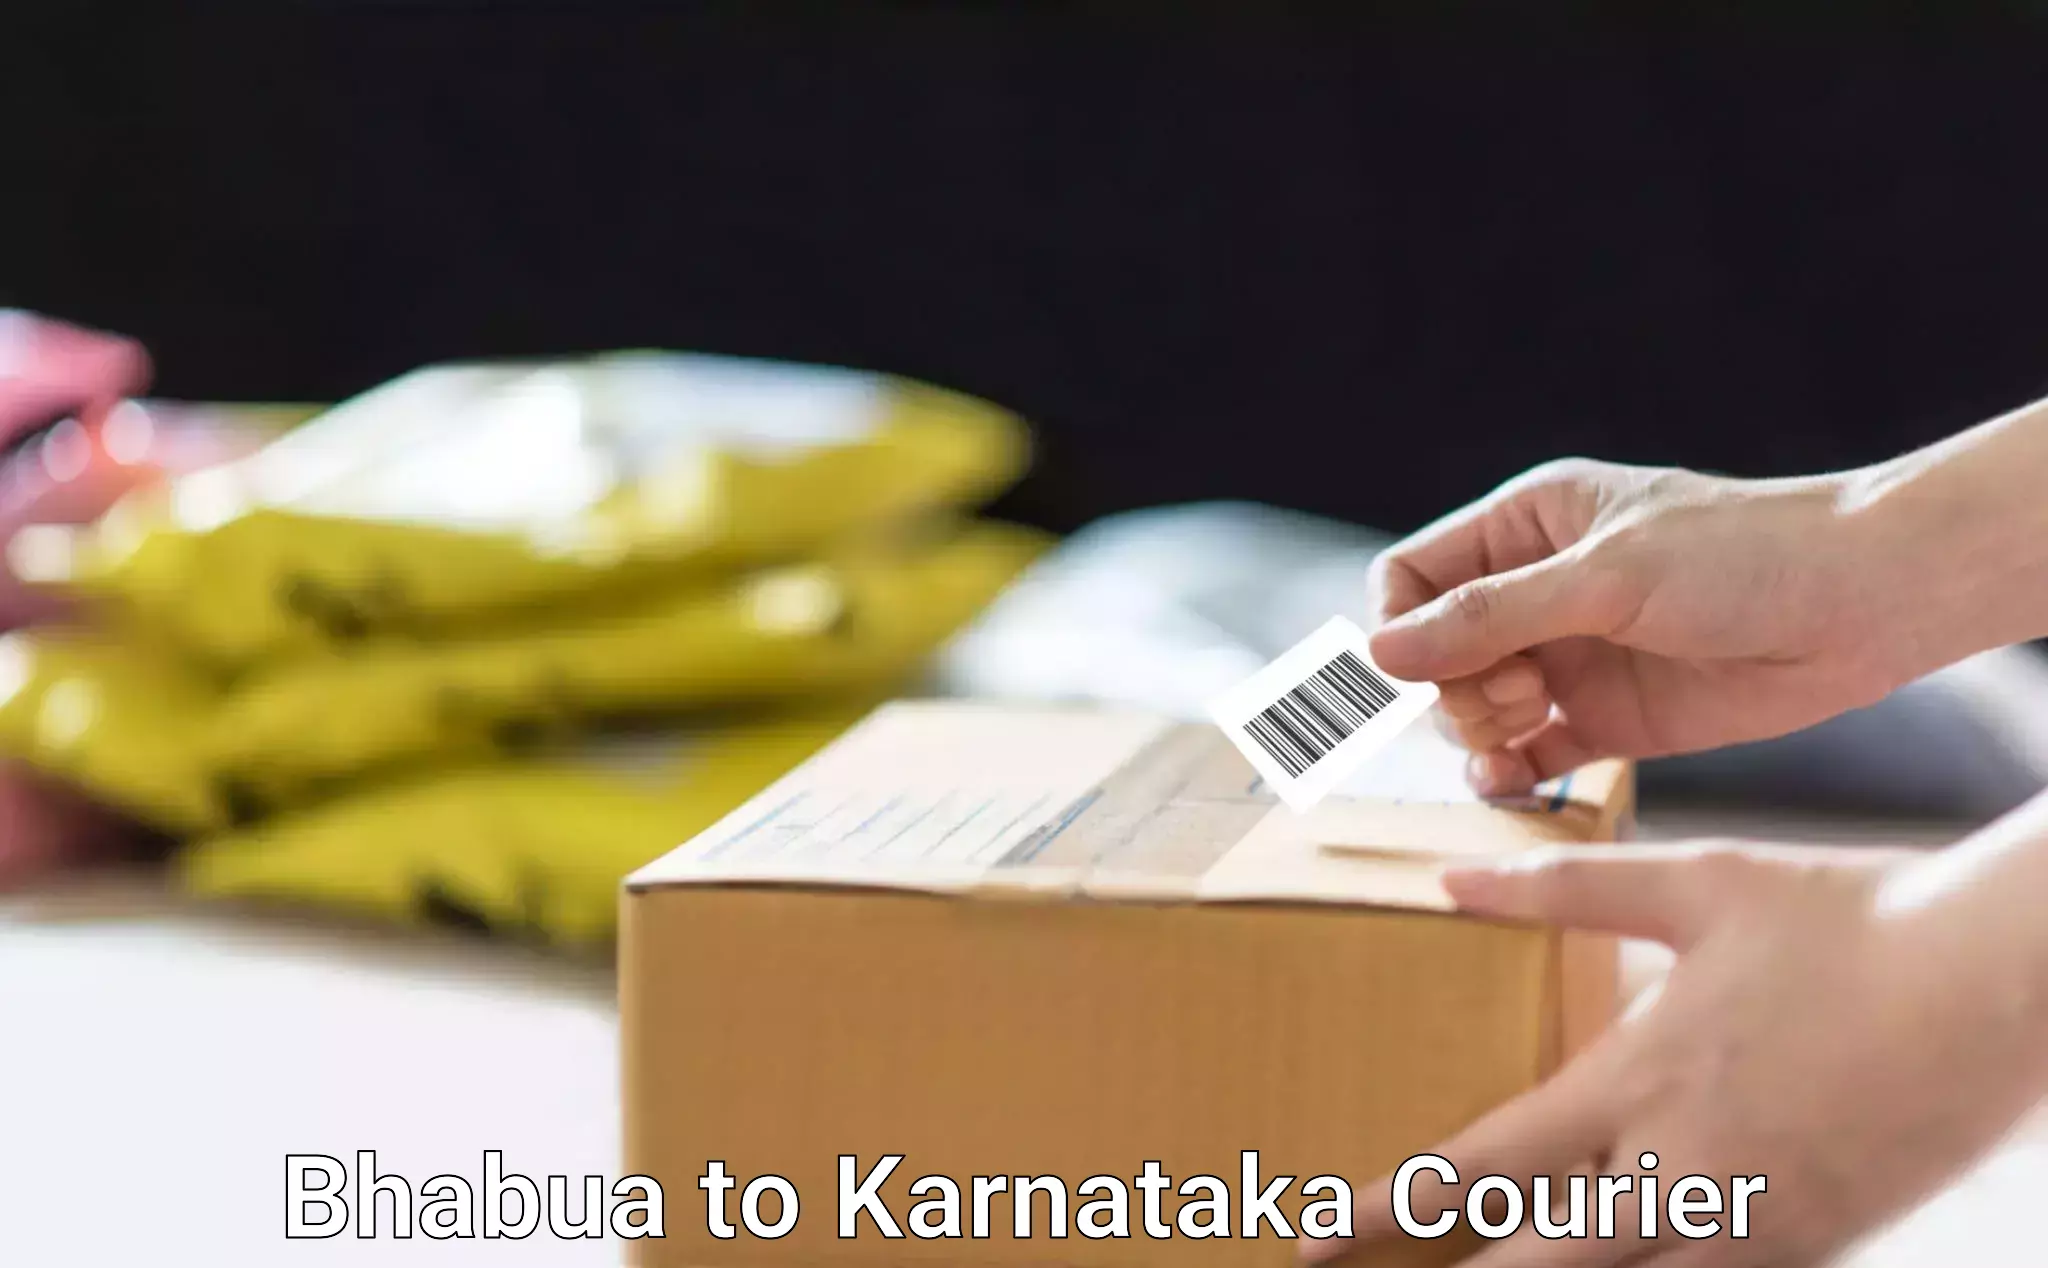 Professional movers Bhabua to Karnataka